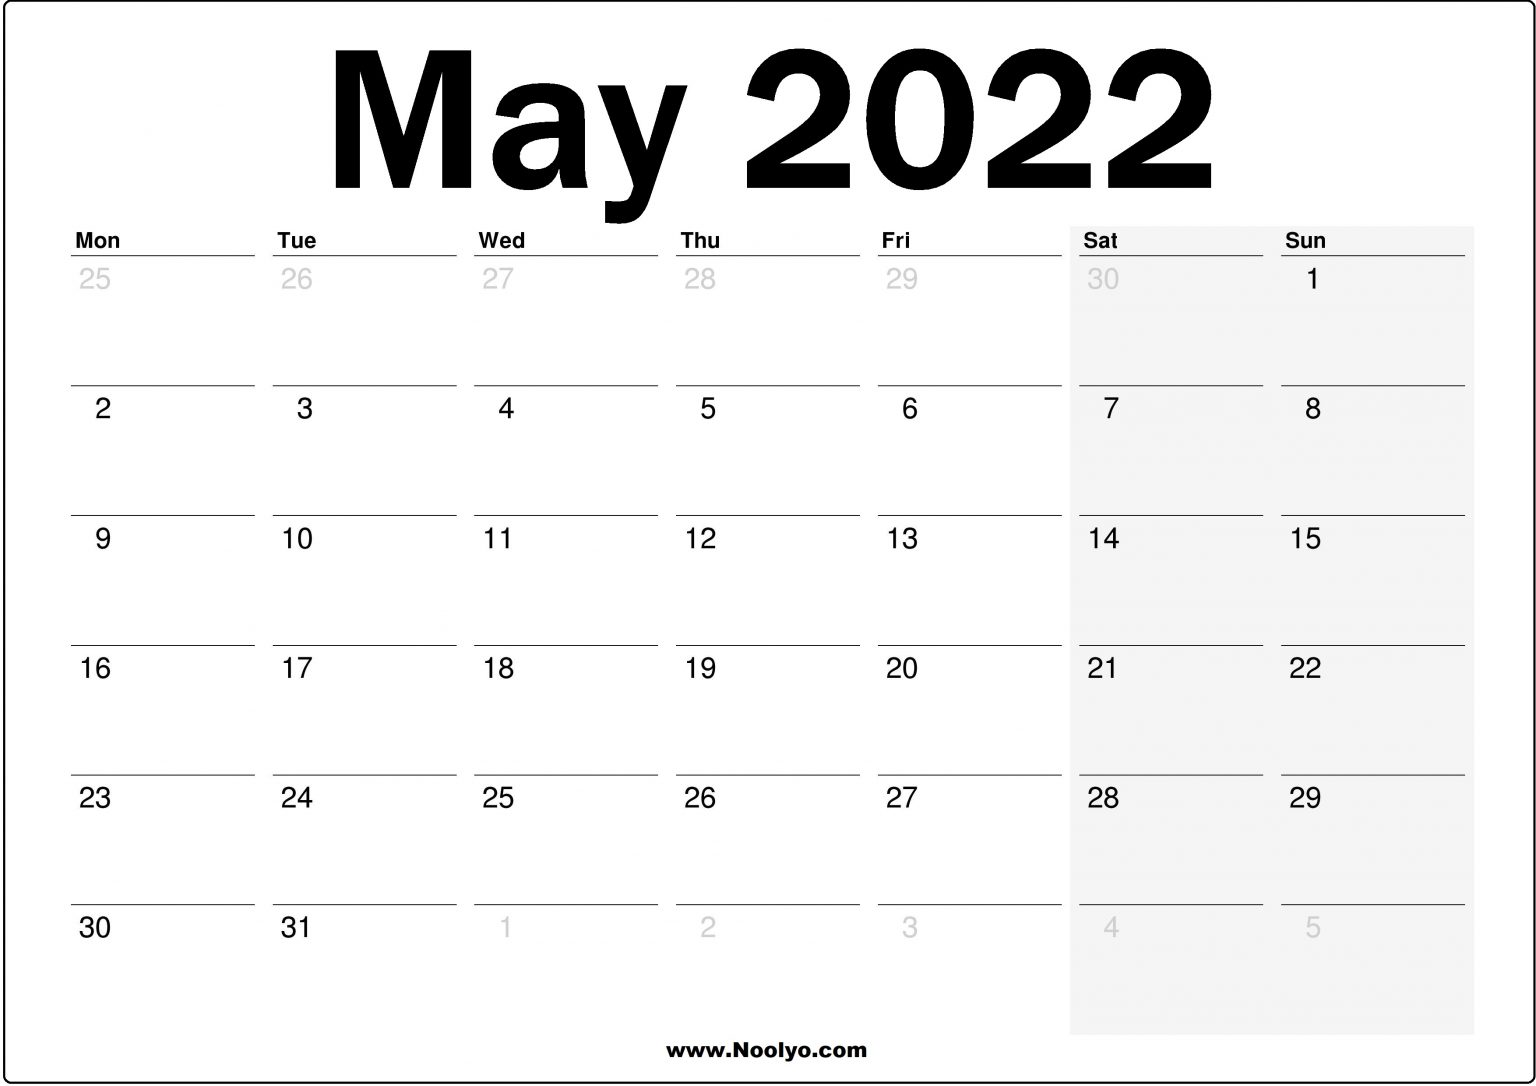 May 2022 UK Calendar Printable Free - Noolyo.com